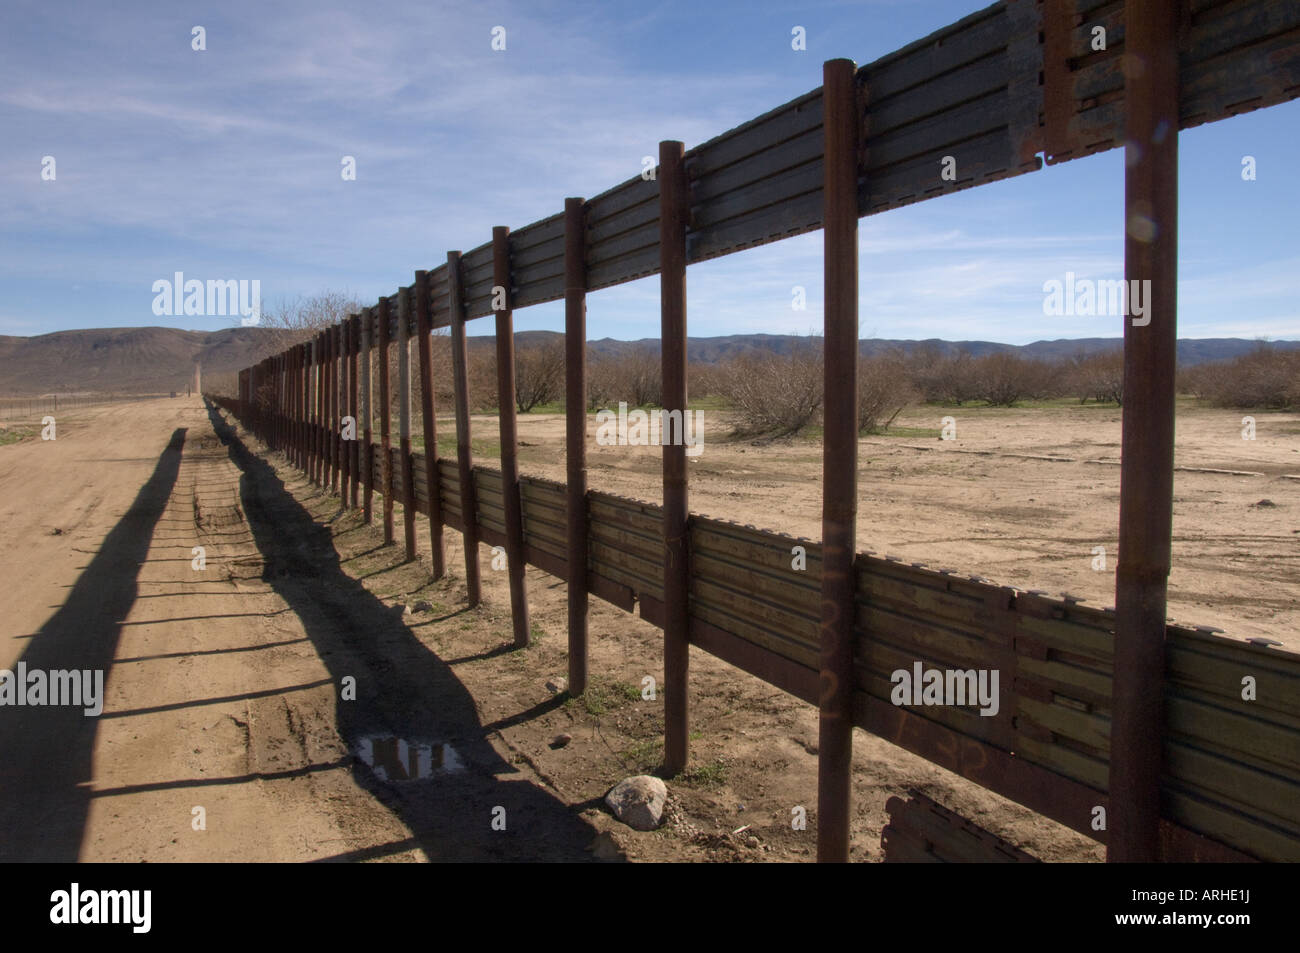 mexico-border-fence-with-holes-at-jacumba-california-ARHE1J.jpg